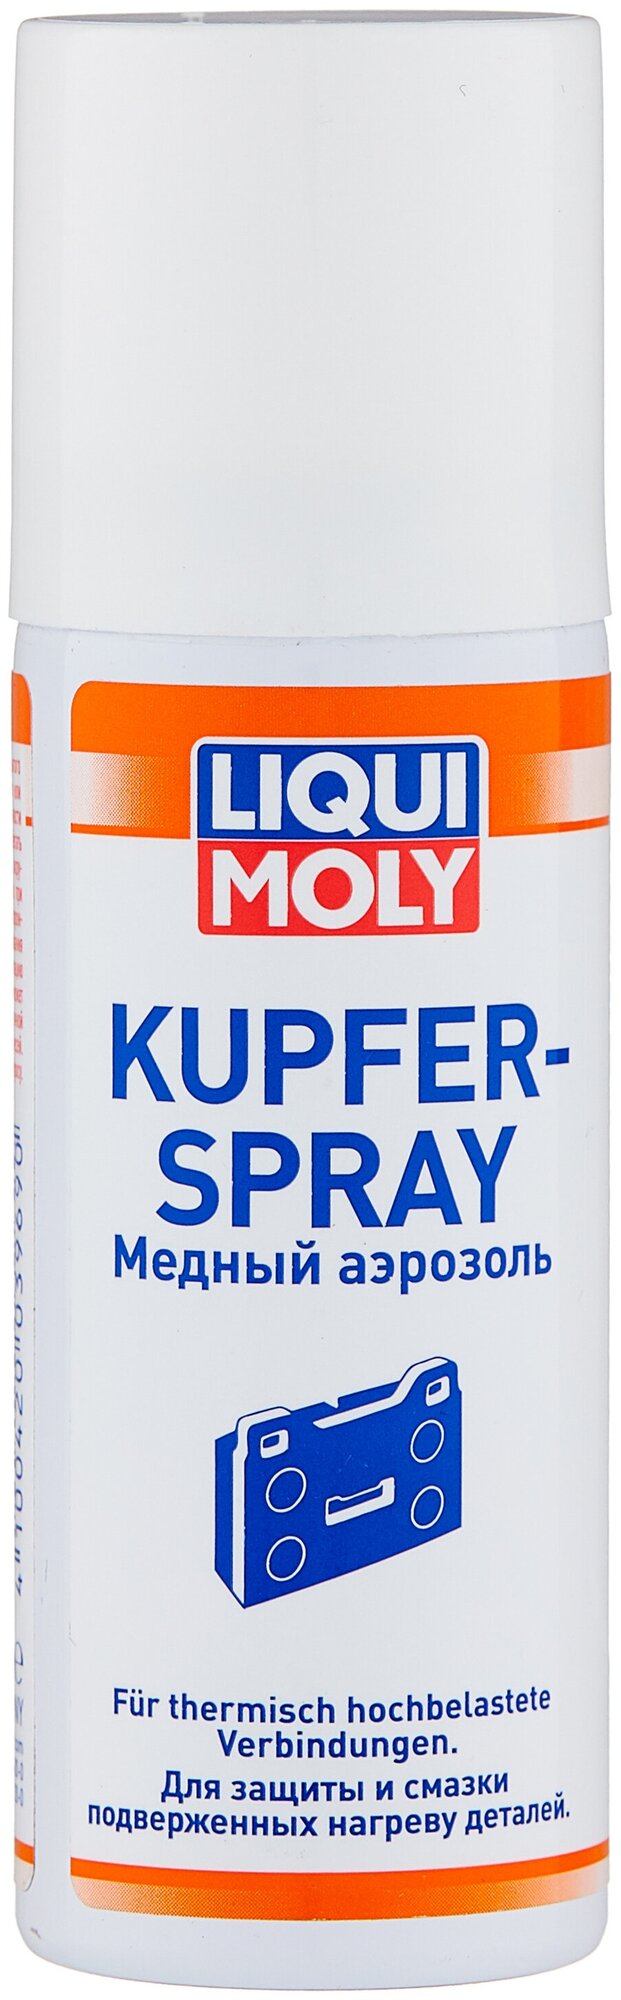 Медный аэрозоль Liqui Moly Kupfer-Spray 0.05 л